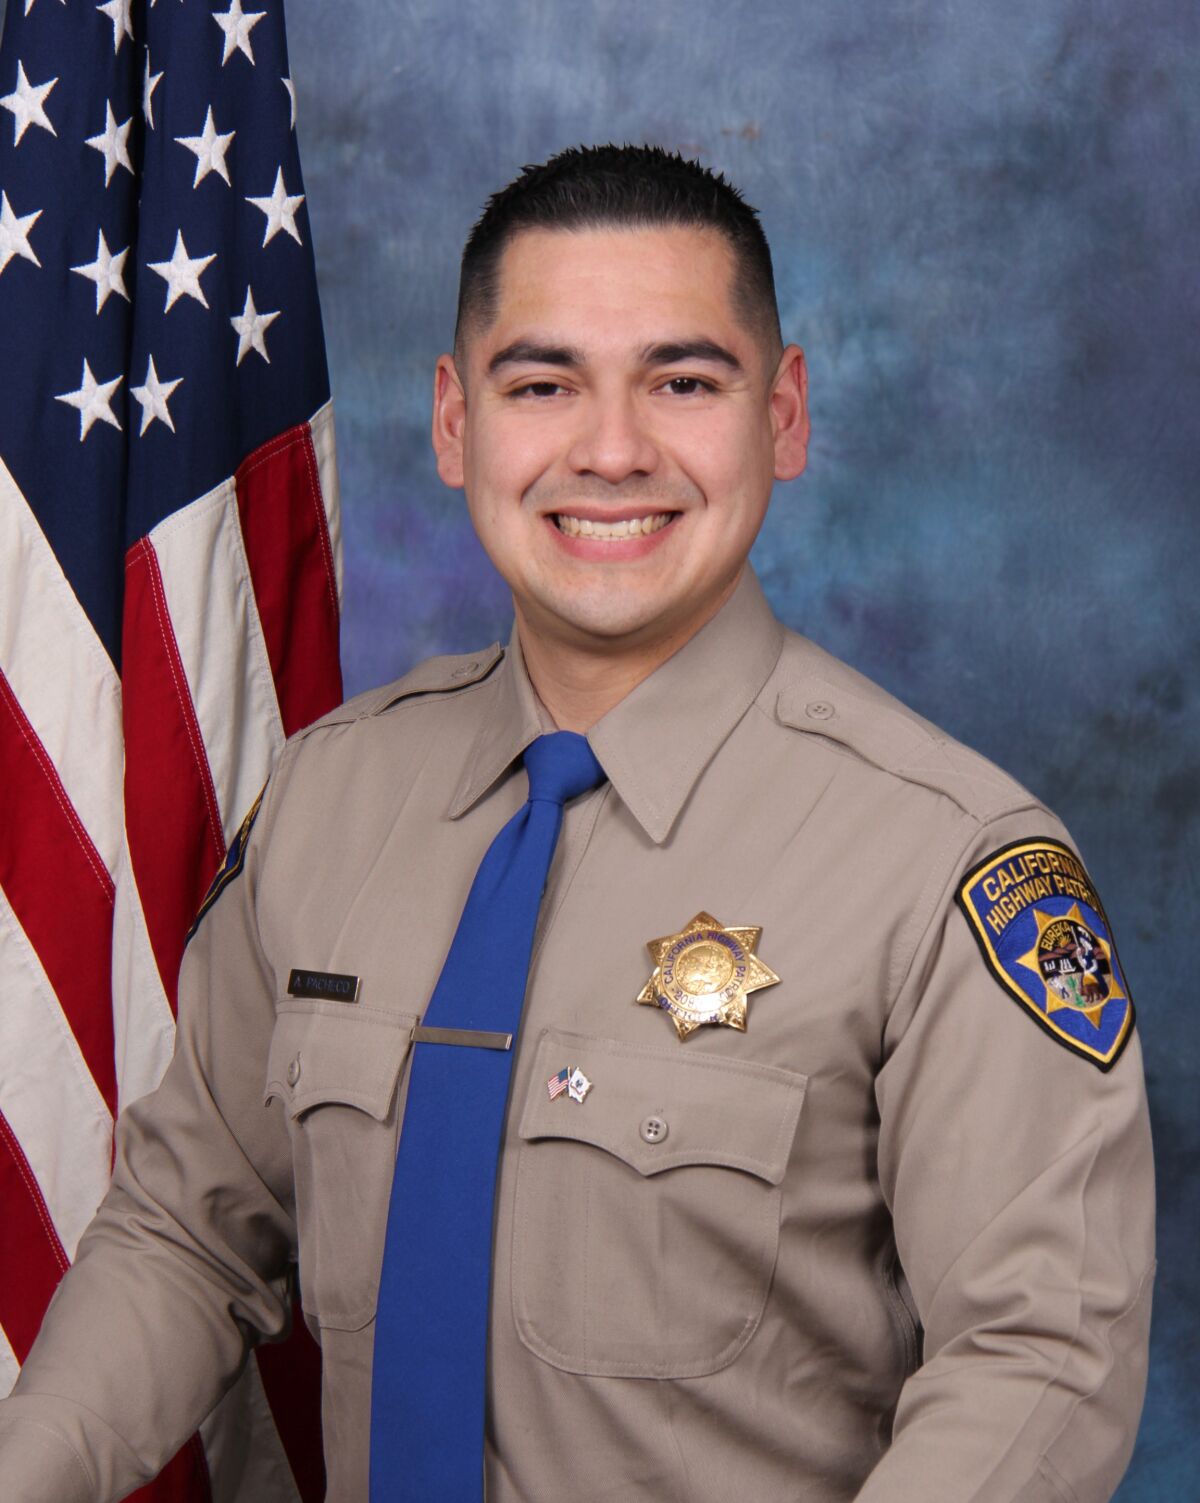 CHP Officer Antonio "Tony" Pacheco